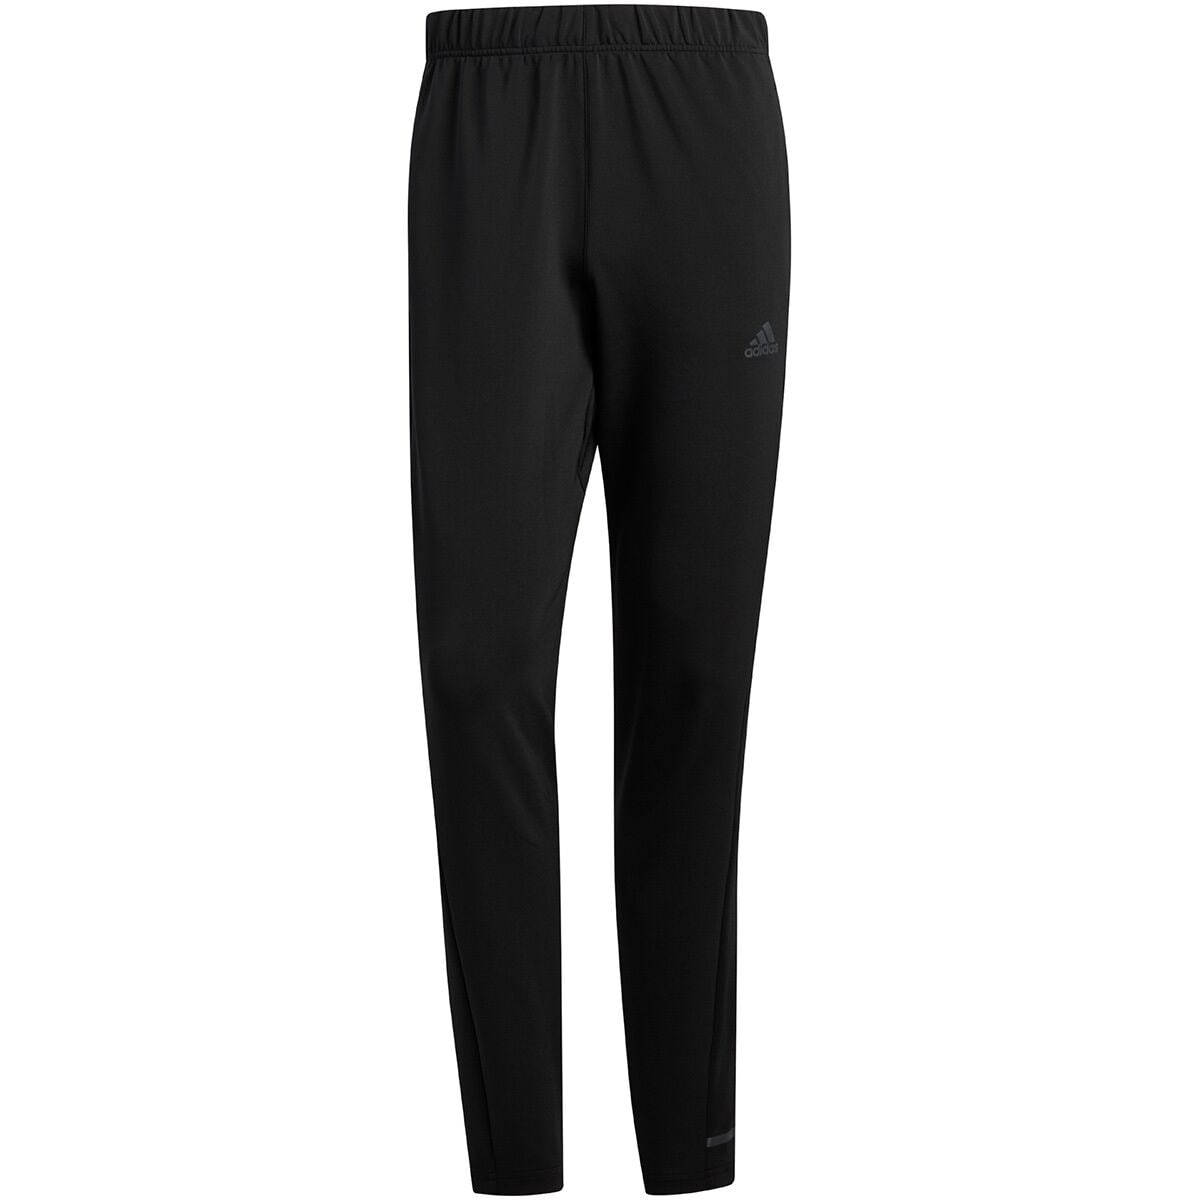 Adidas Astro Pants - Men's - Clothing